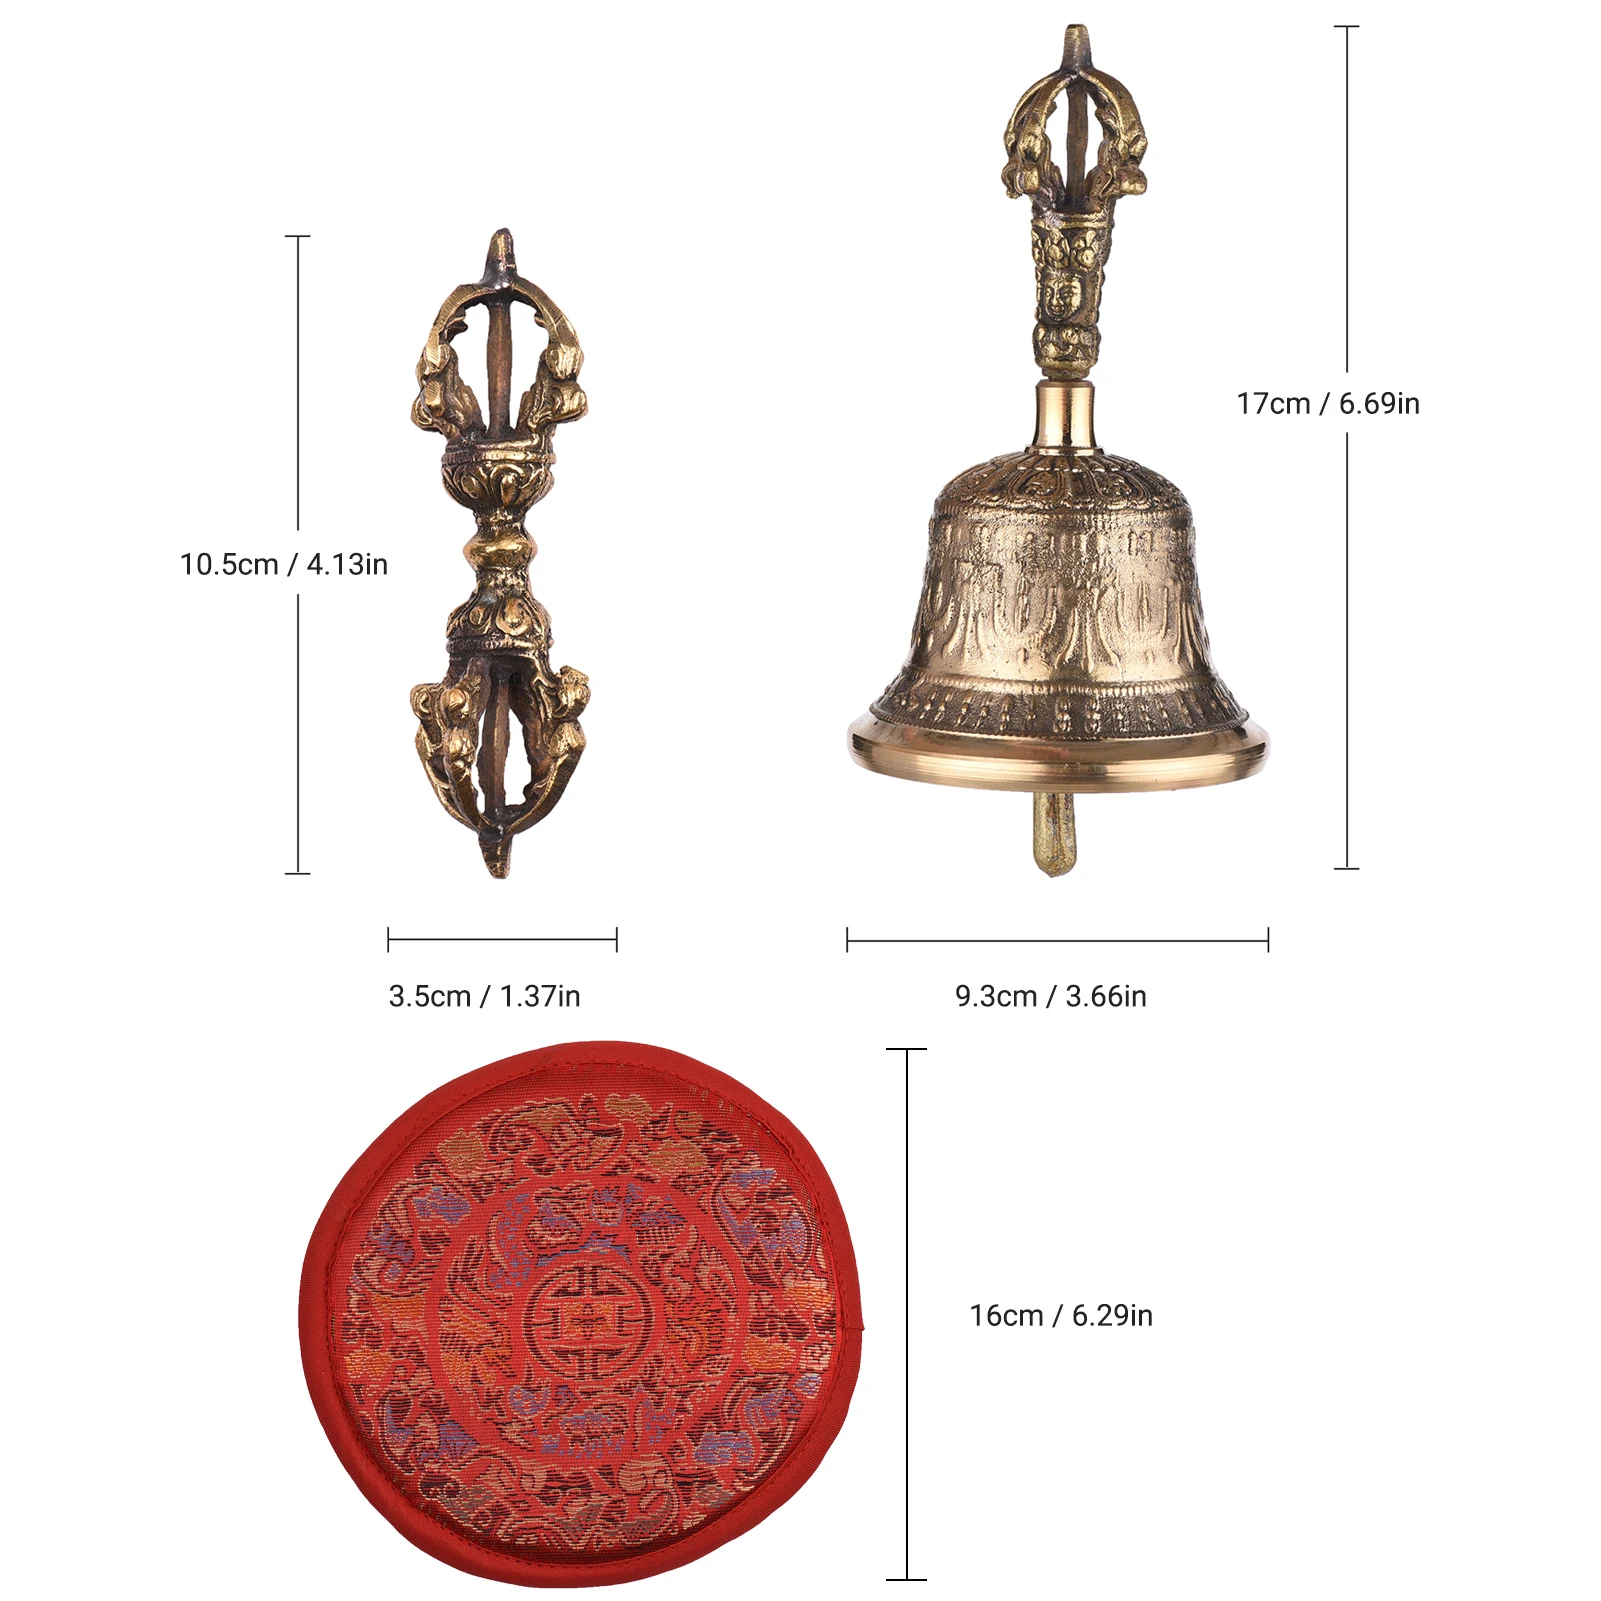 LGYKUMEG Tibetan Buddhist Meditation Bell Tibetan Hand Bell Meditation & Prayer Bells Dorje Vajra Buddhist Bell 4 inches Christmas,S 